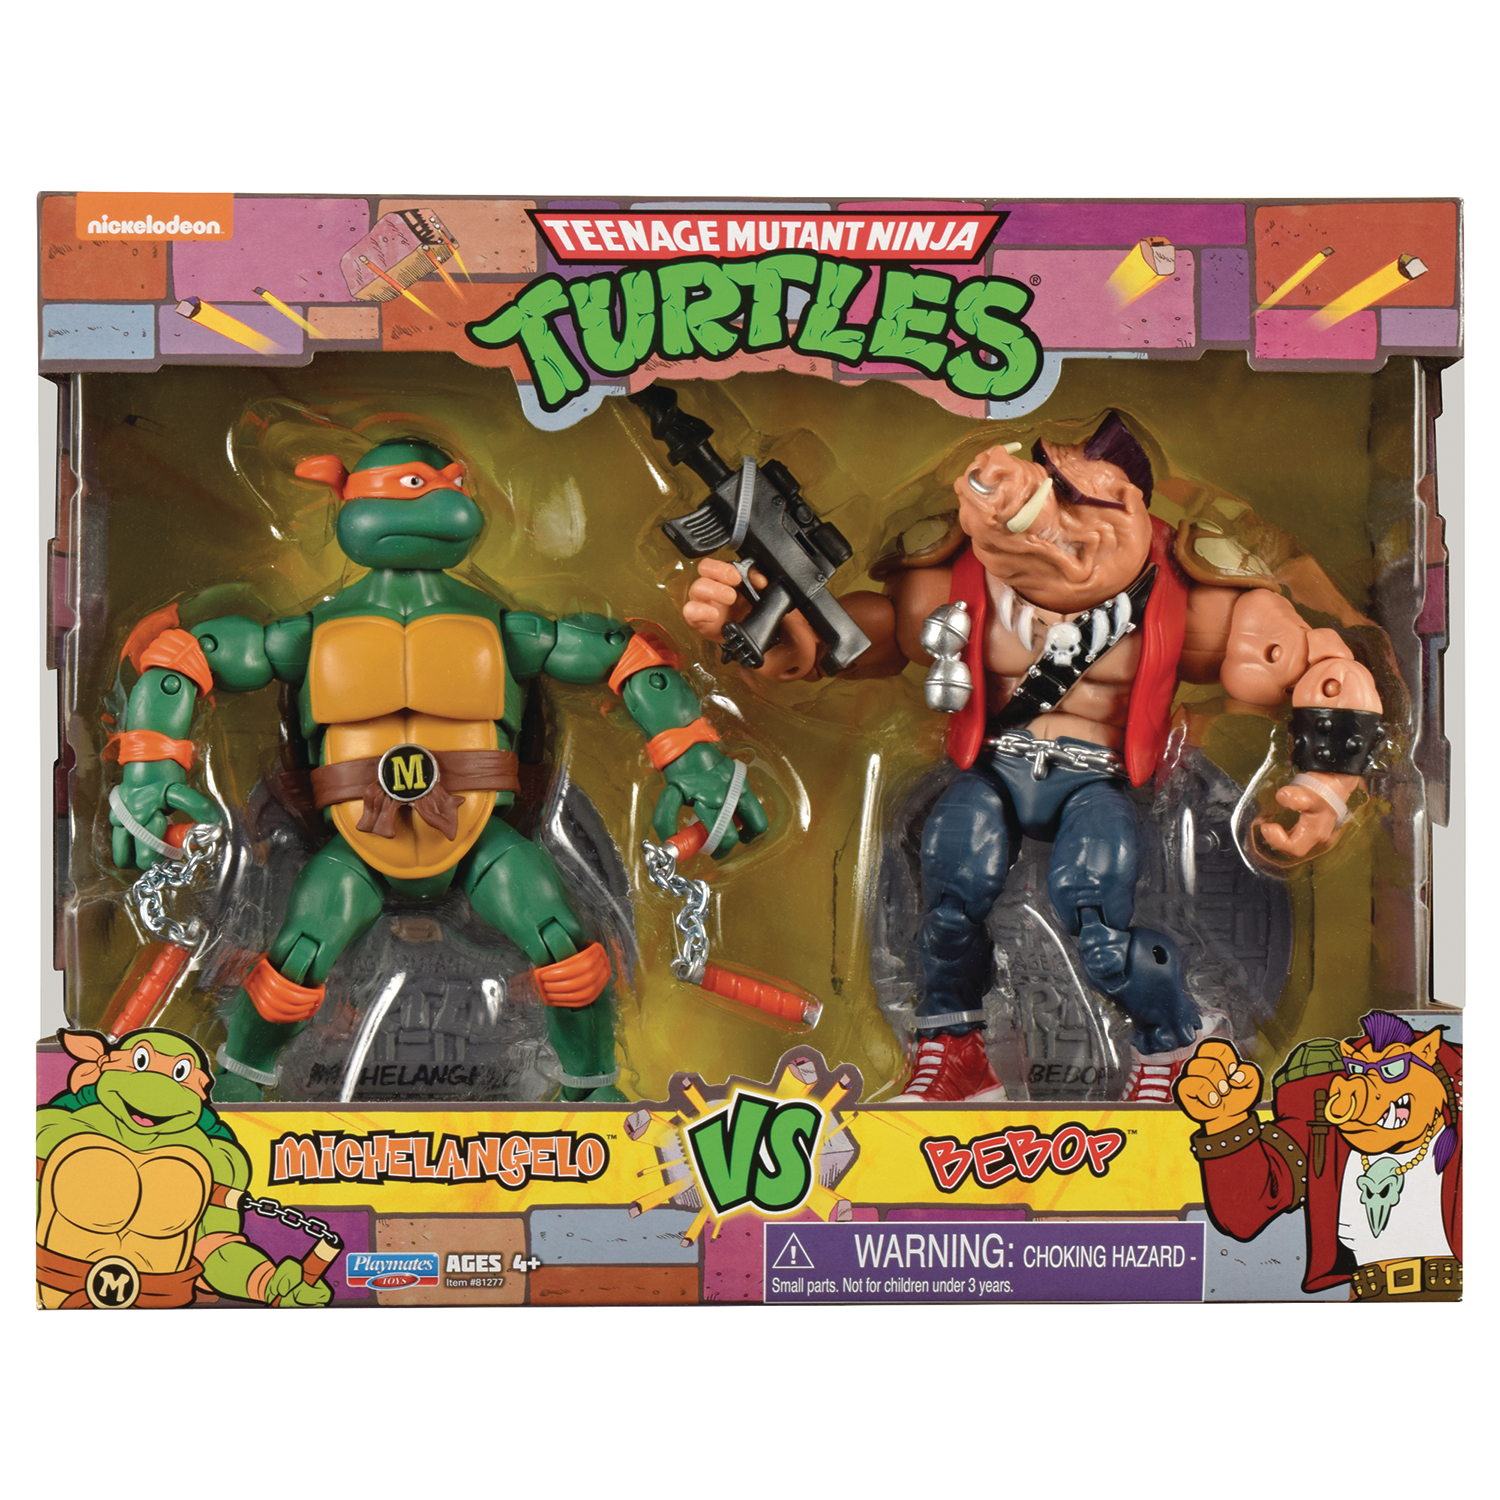 Teenage Mutant Ninja Turtles Classic Mikey Vs Bebop 2pk Action Figure